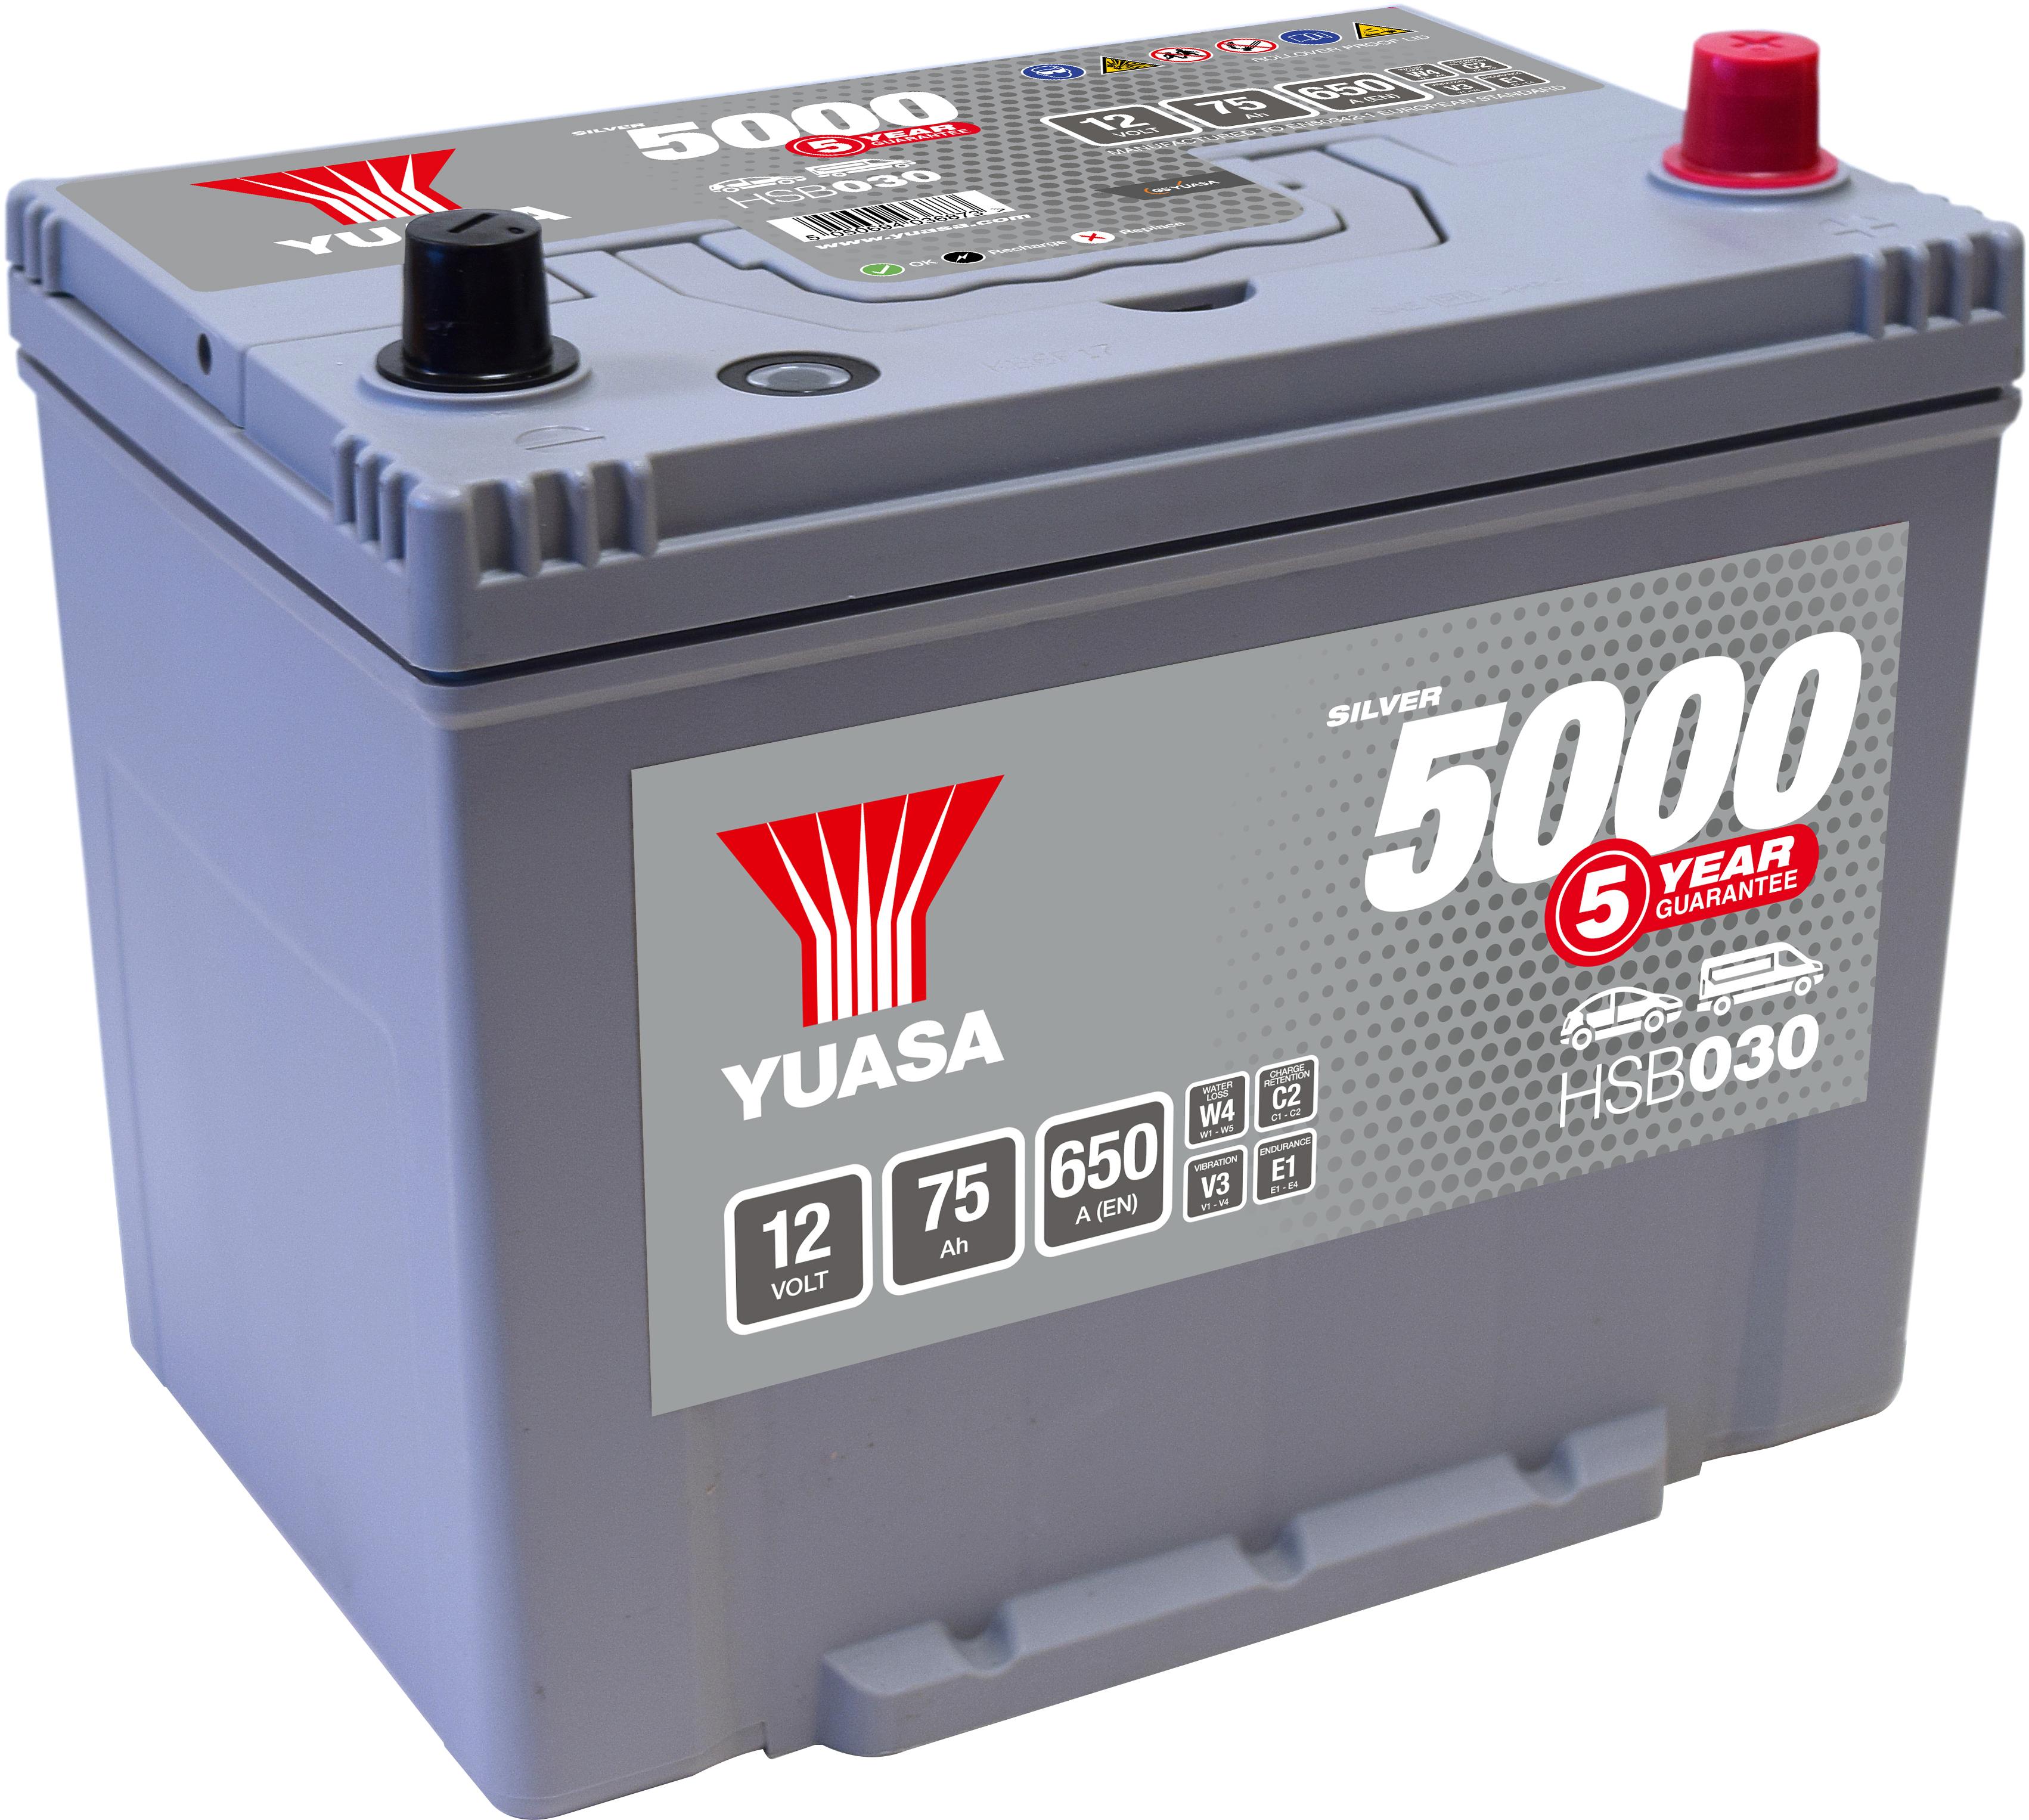 Yuasa Hsb030 Silver 12V Car Battery 5 Year Guarantee